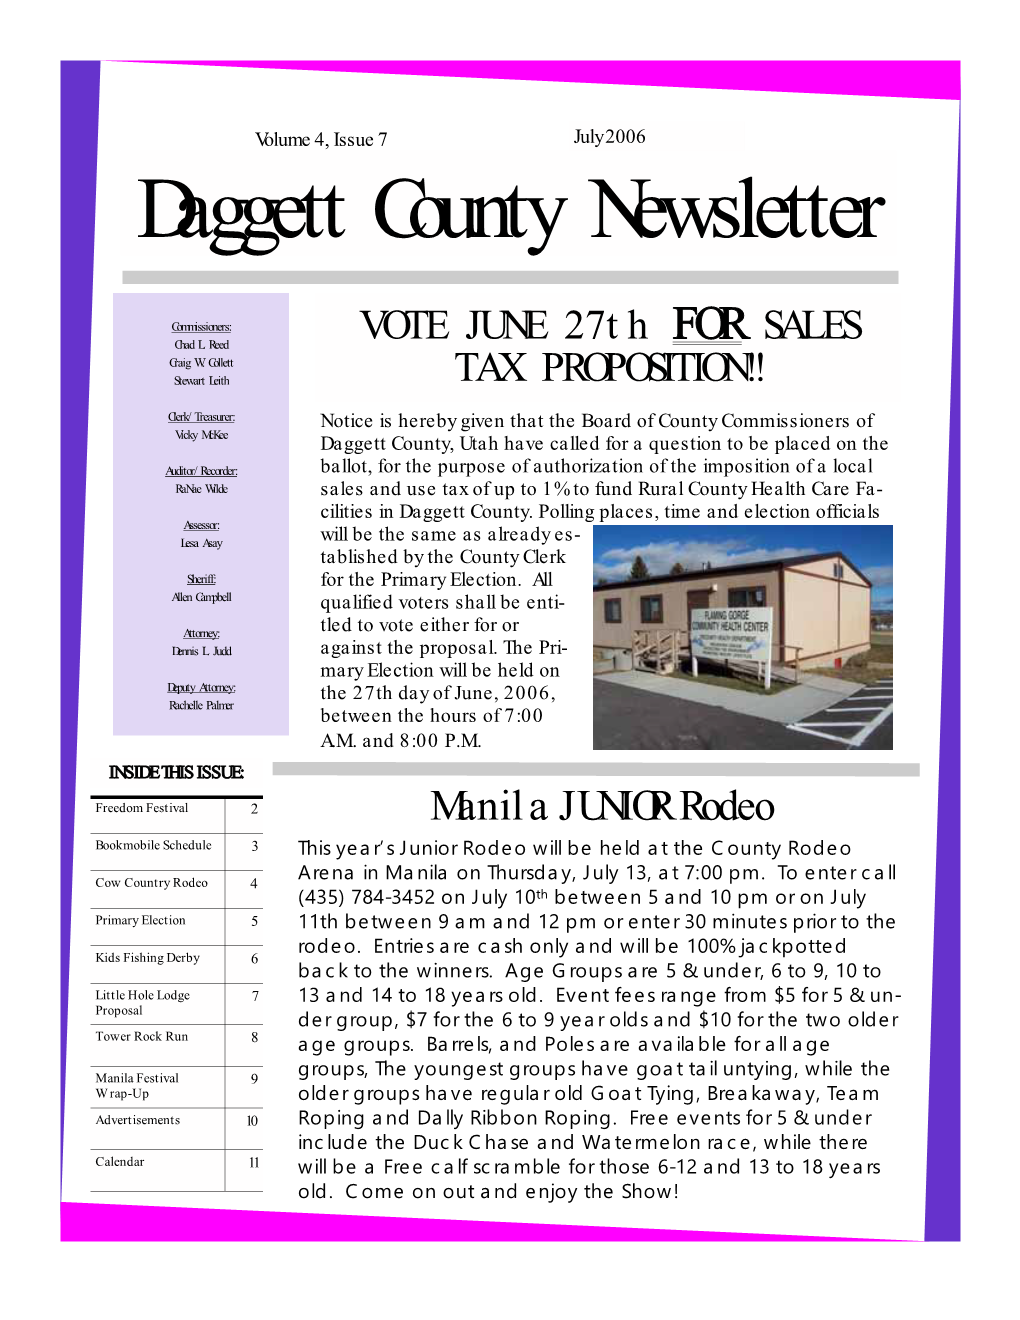 July 2006 Newsletter